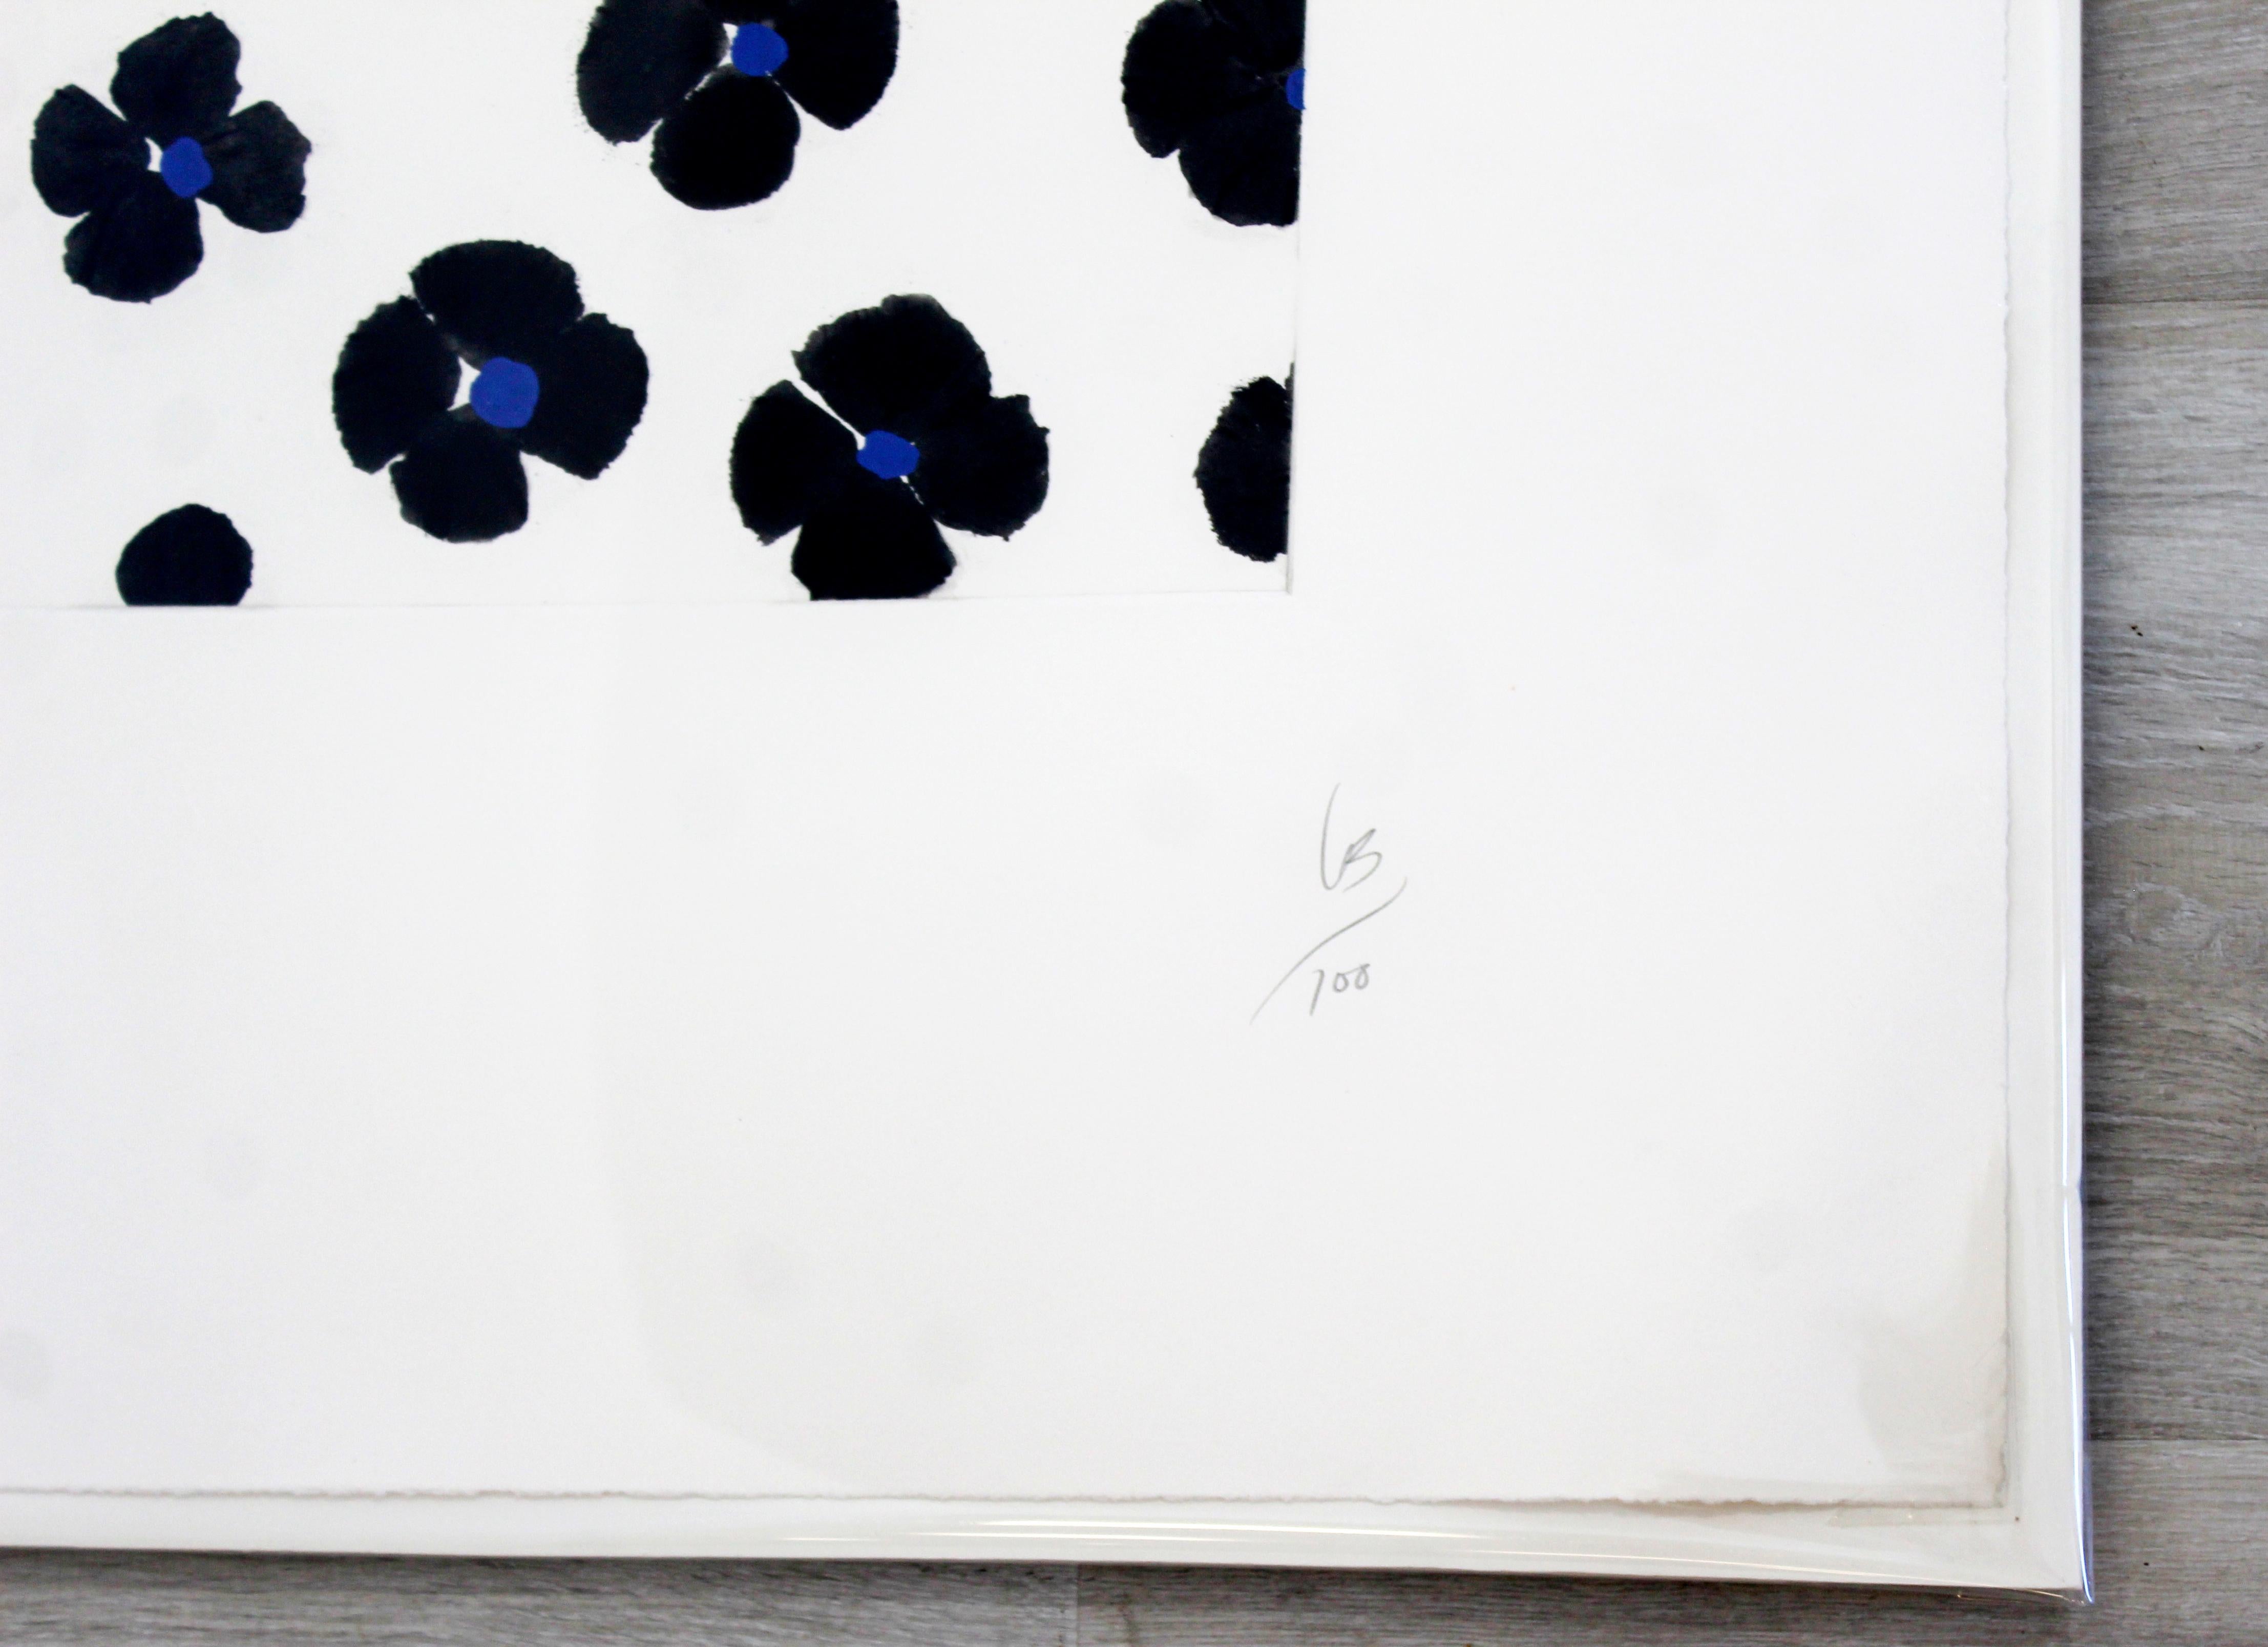 Paper Contemporary Unframed Signed Donald Sultan Aquatint Black Blue Flowers, 2008